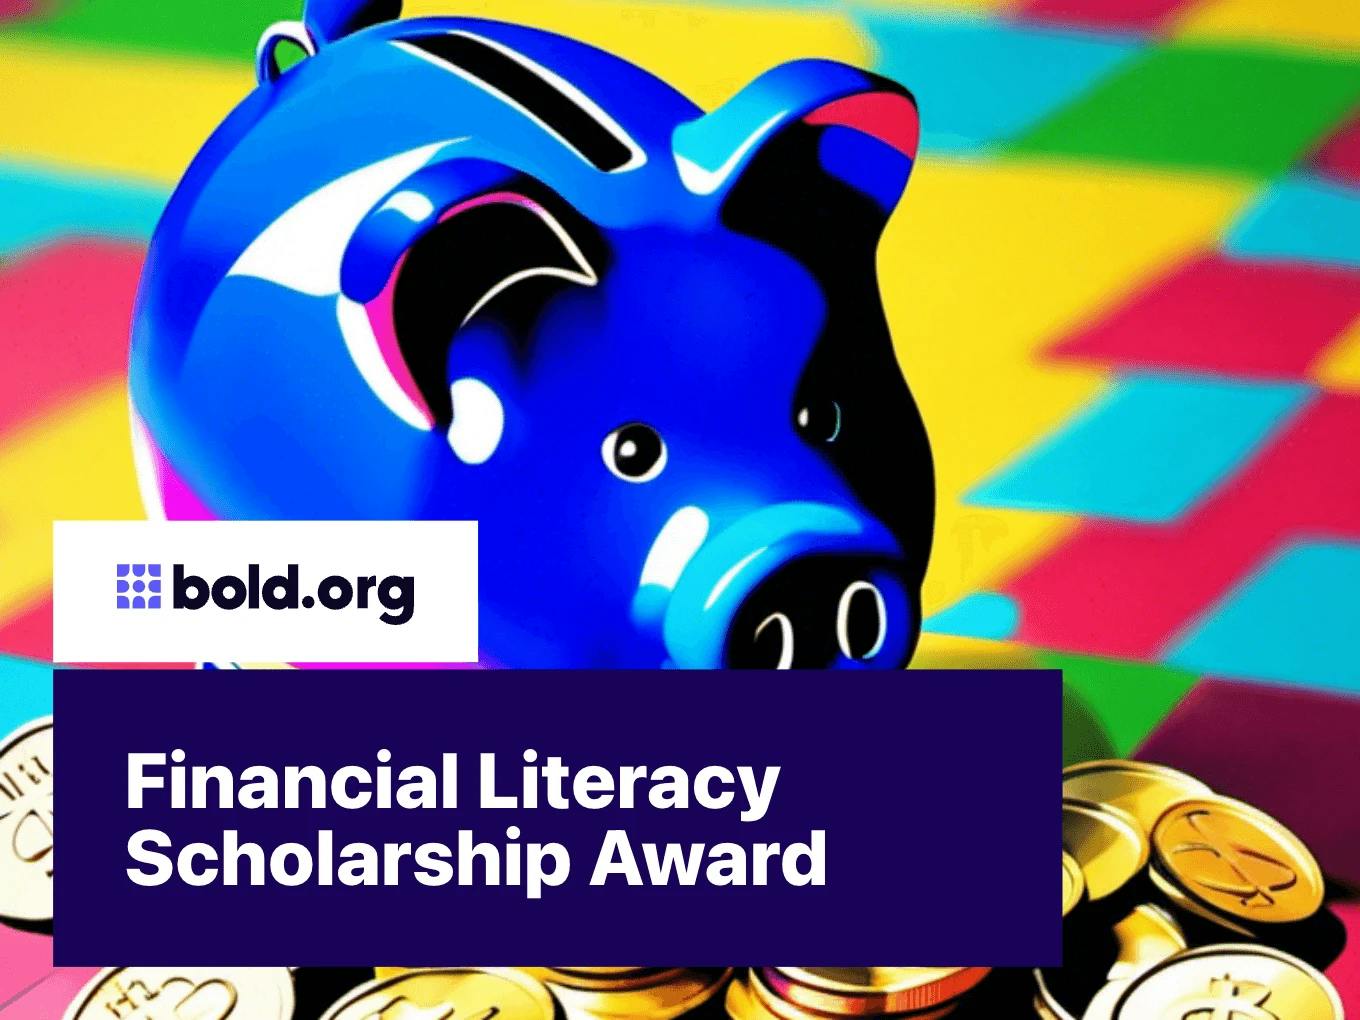 Financial Literacy Scholarship Award